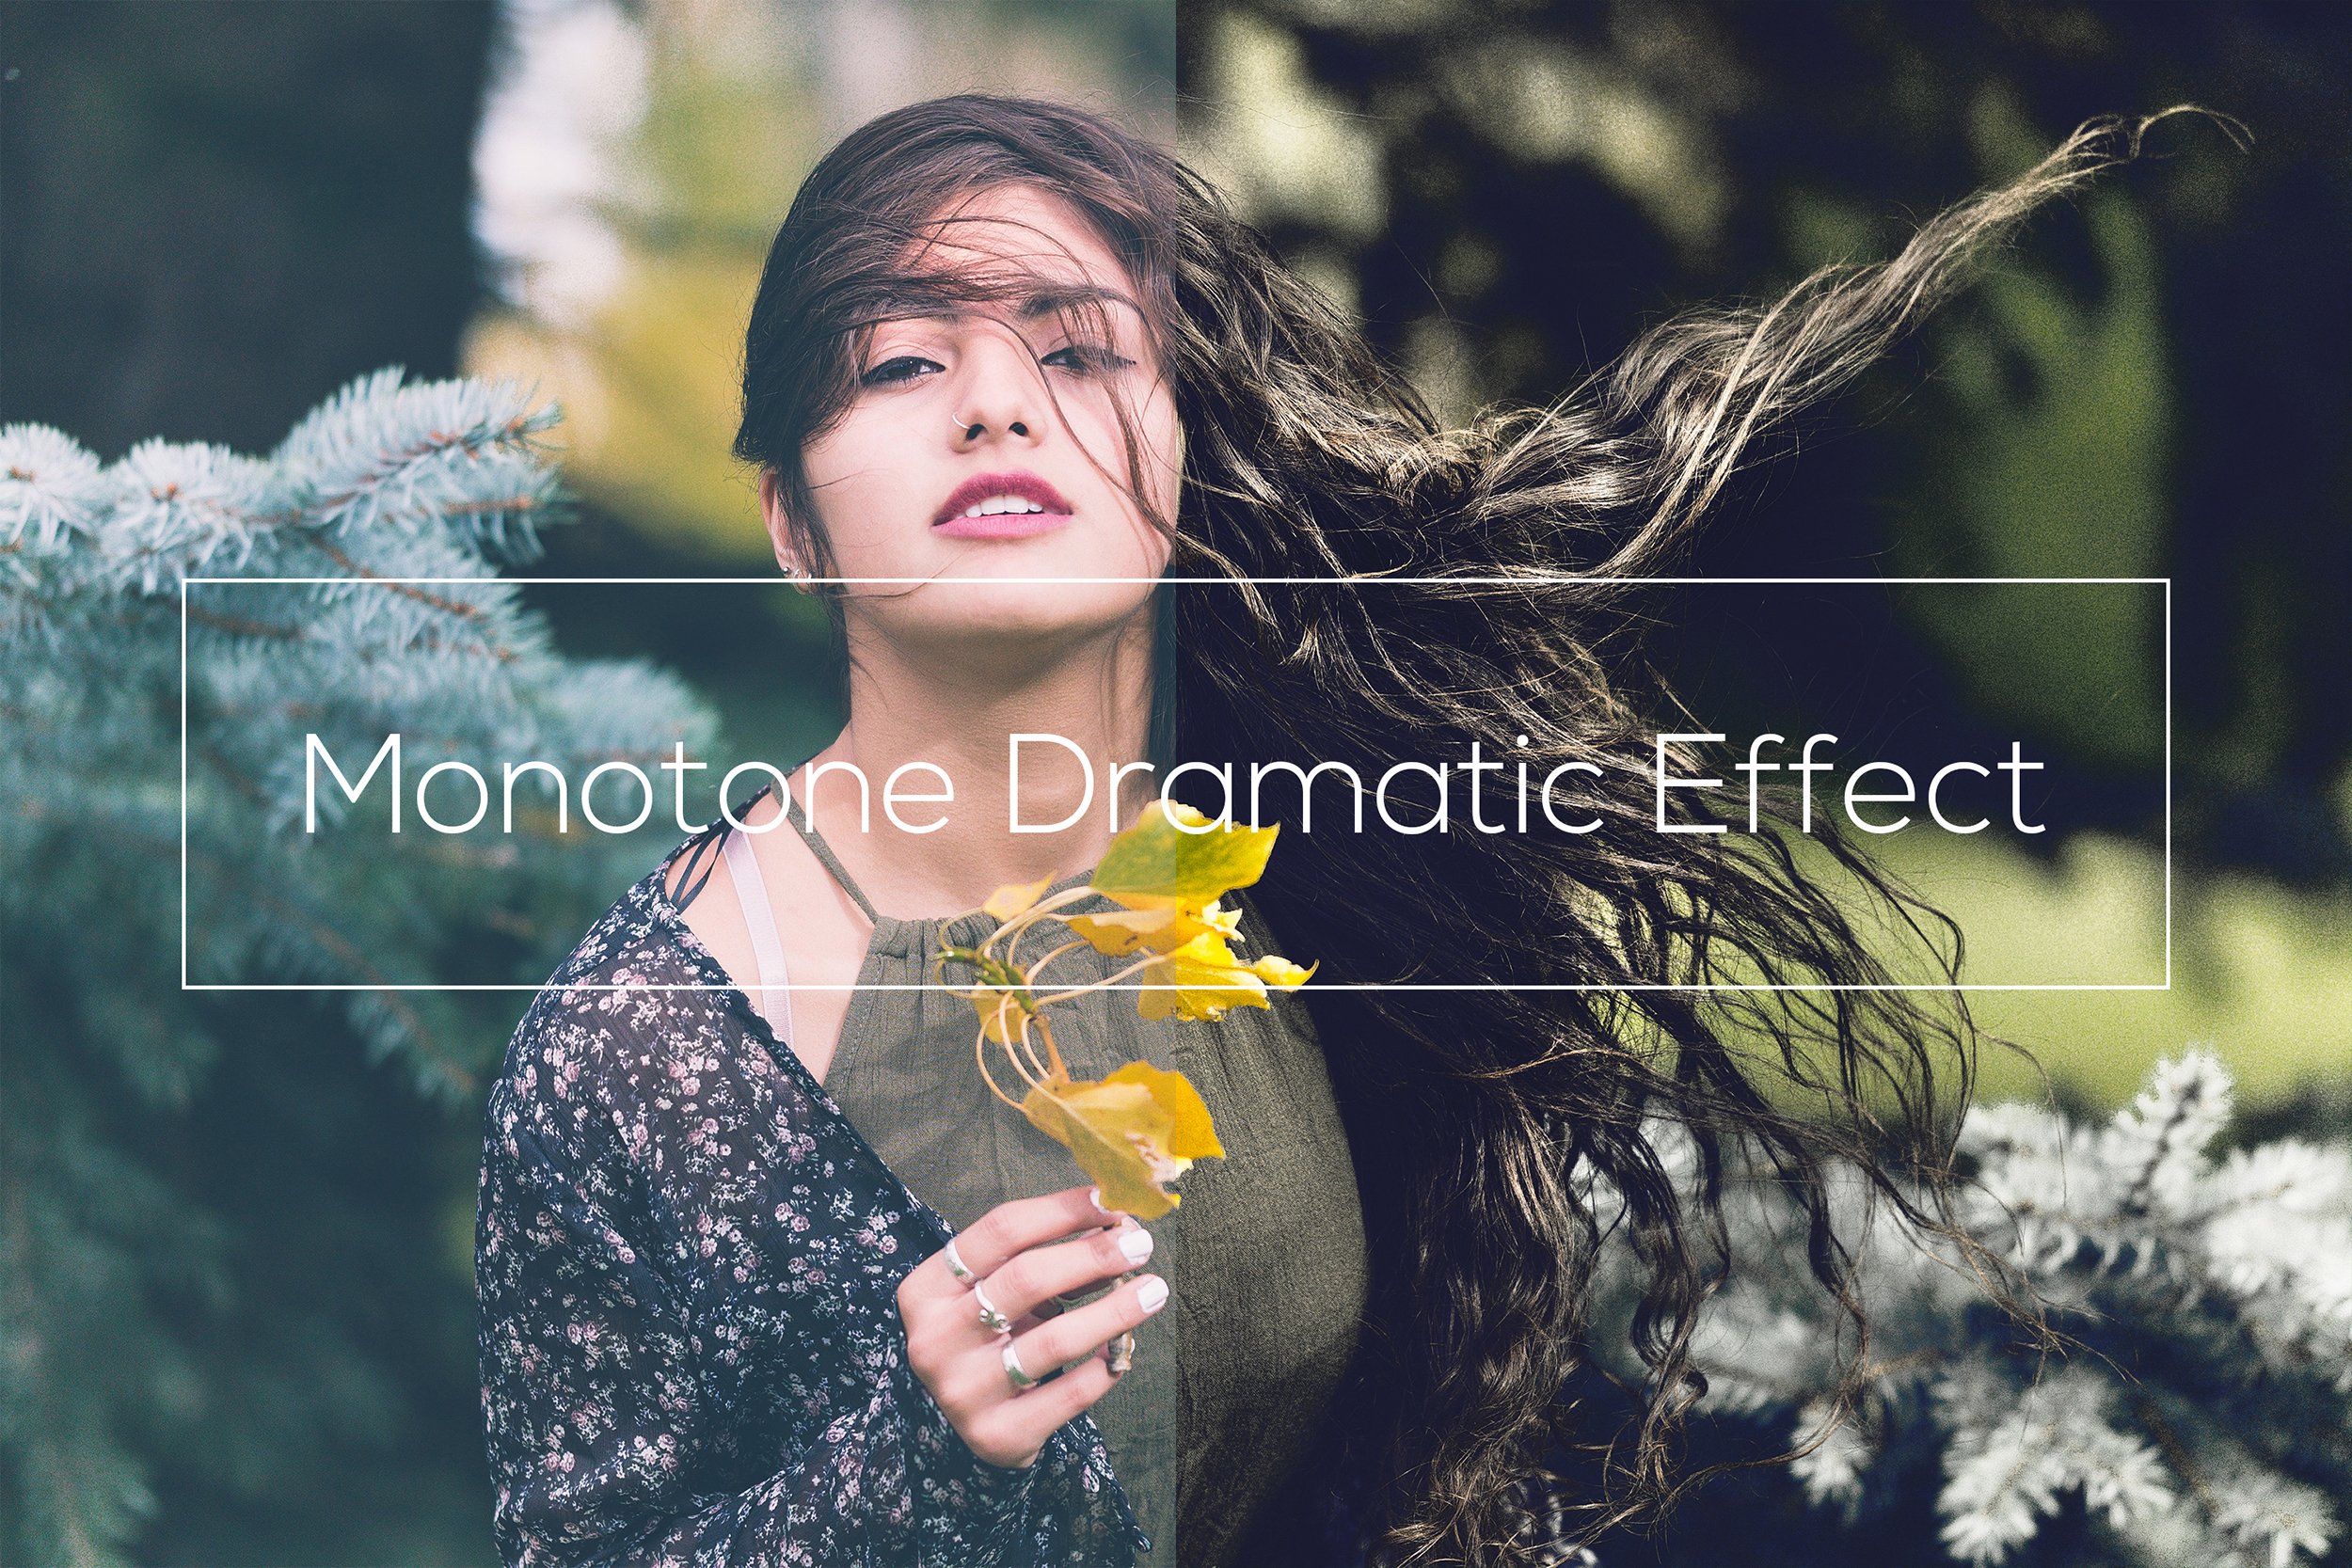 Monotone Dramatic Effectcover image.